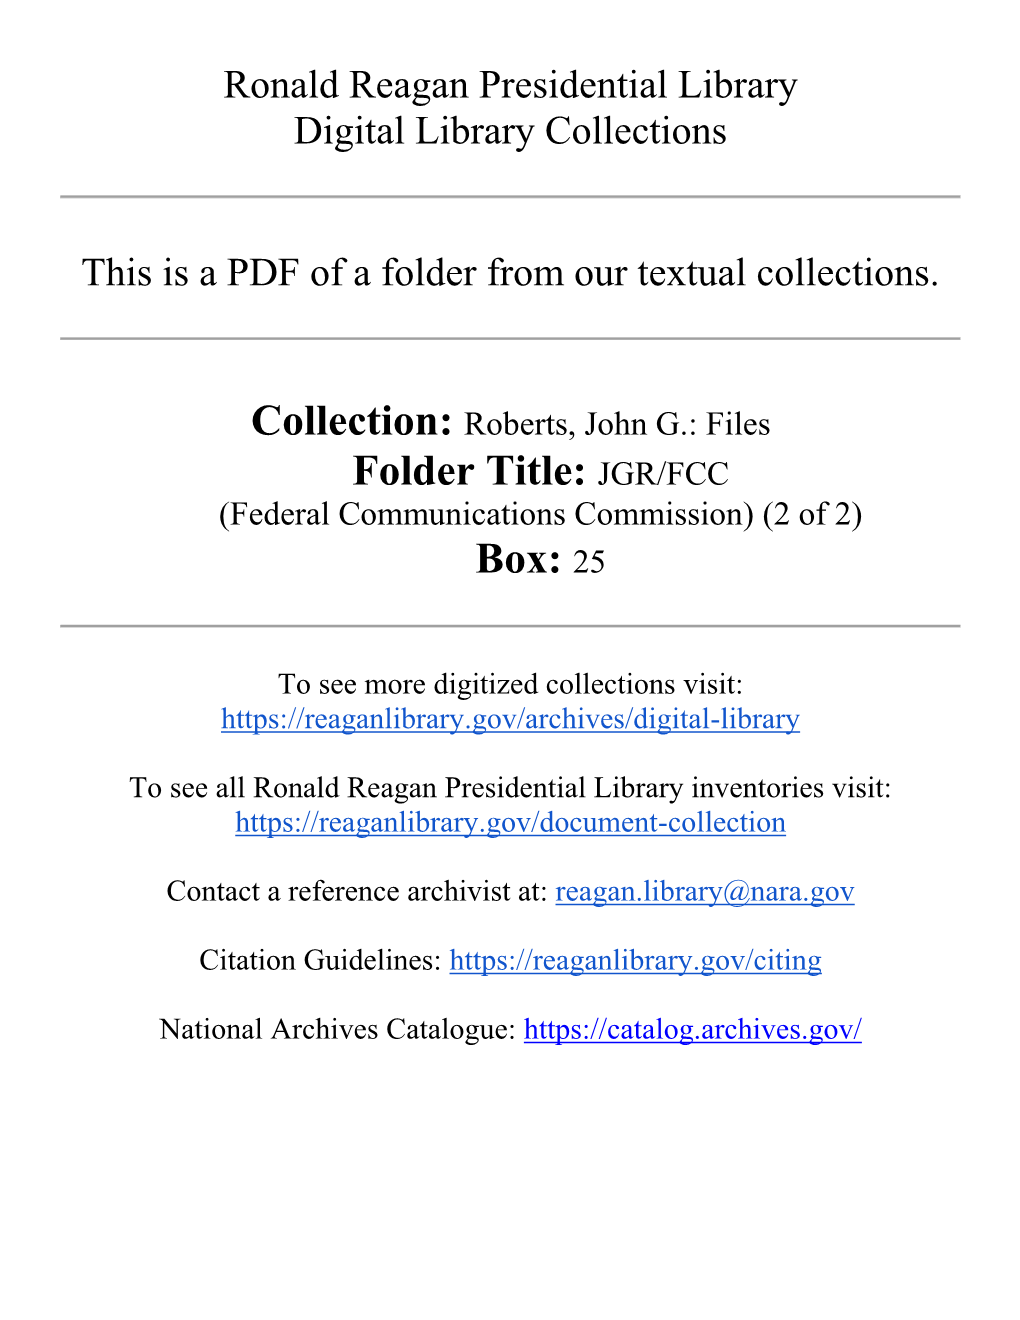 Folder Title: JGR/FCC Box: 25